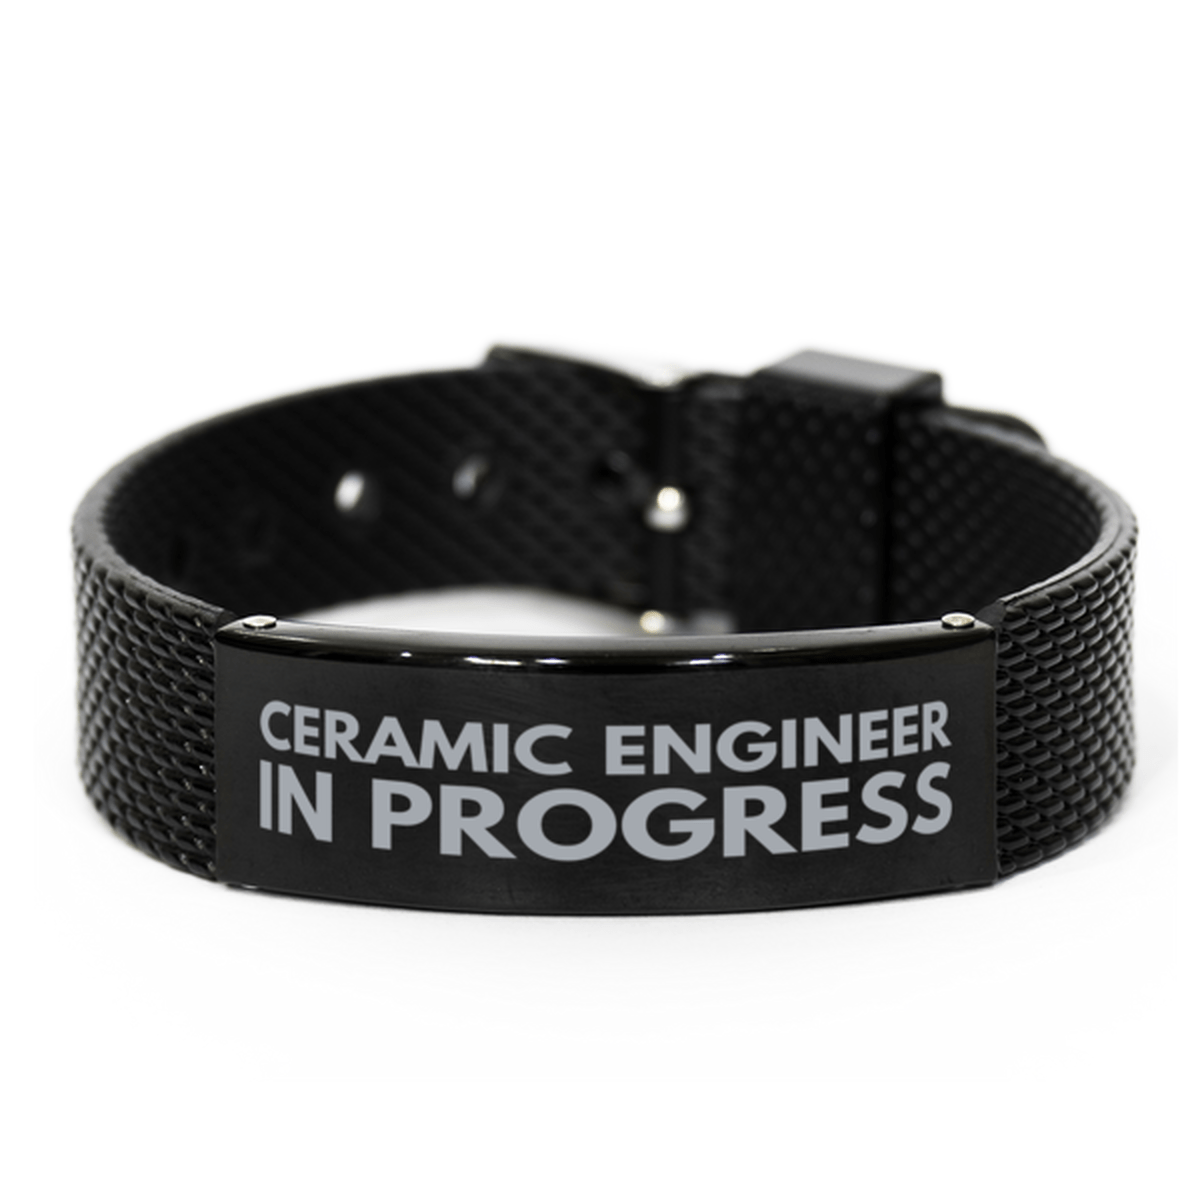 Inspirational Ceramic Engineer Black Shark Mesh Bracelet, Ceramic Engineer In Progress, Best Graduation Gifts for Students